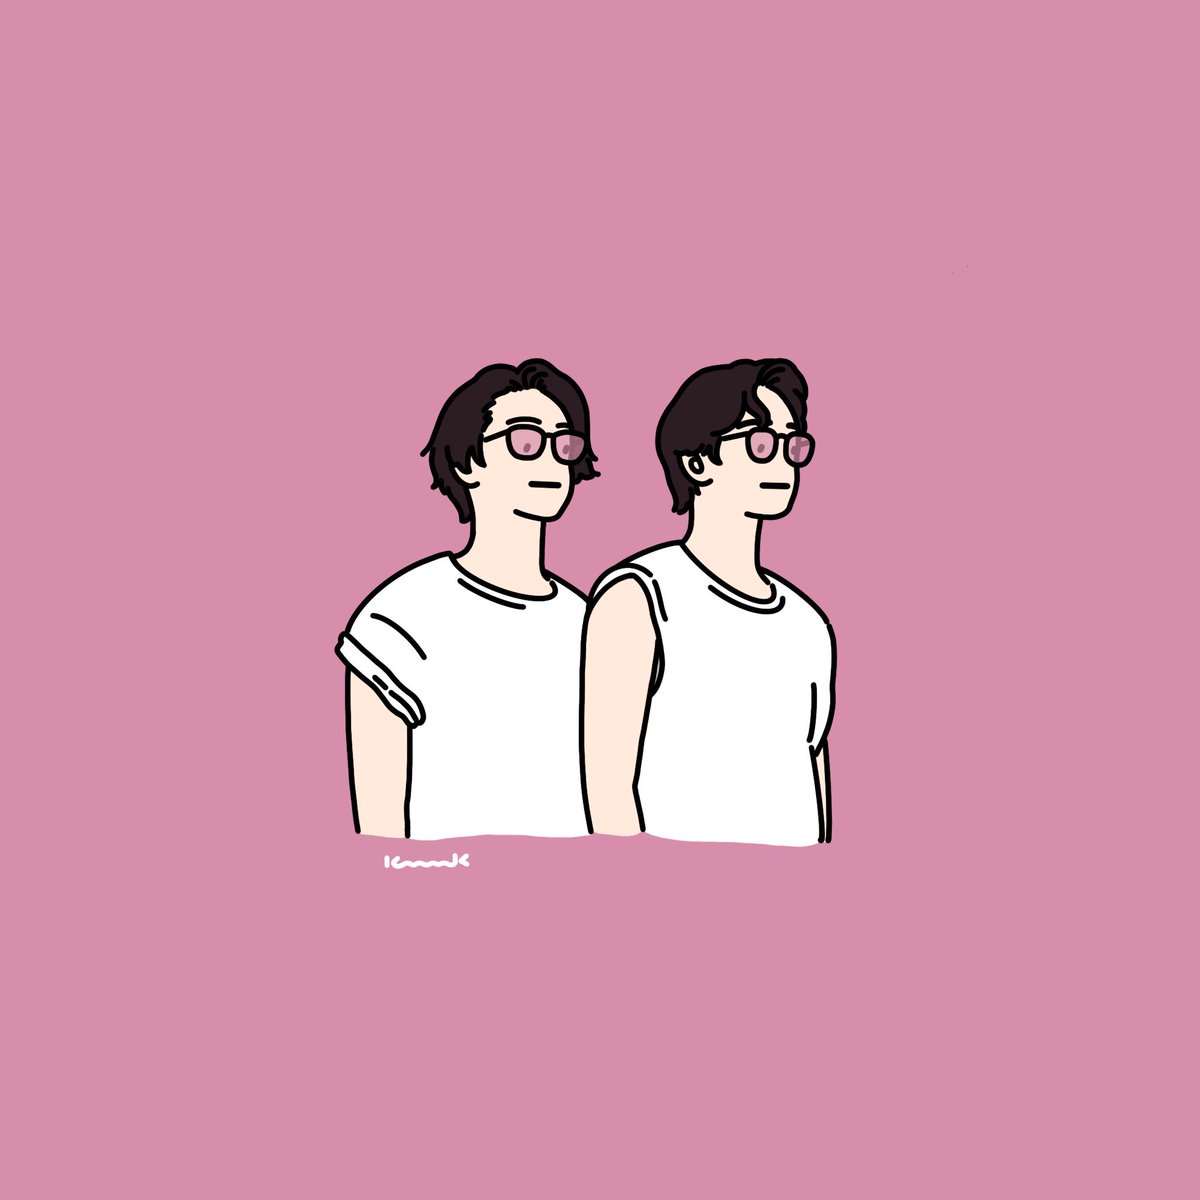 2boys multiple boys shirt male focus pink background white shirt sunglasses  illustration images